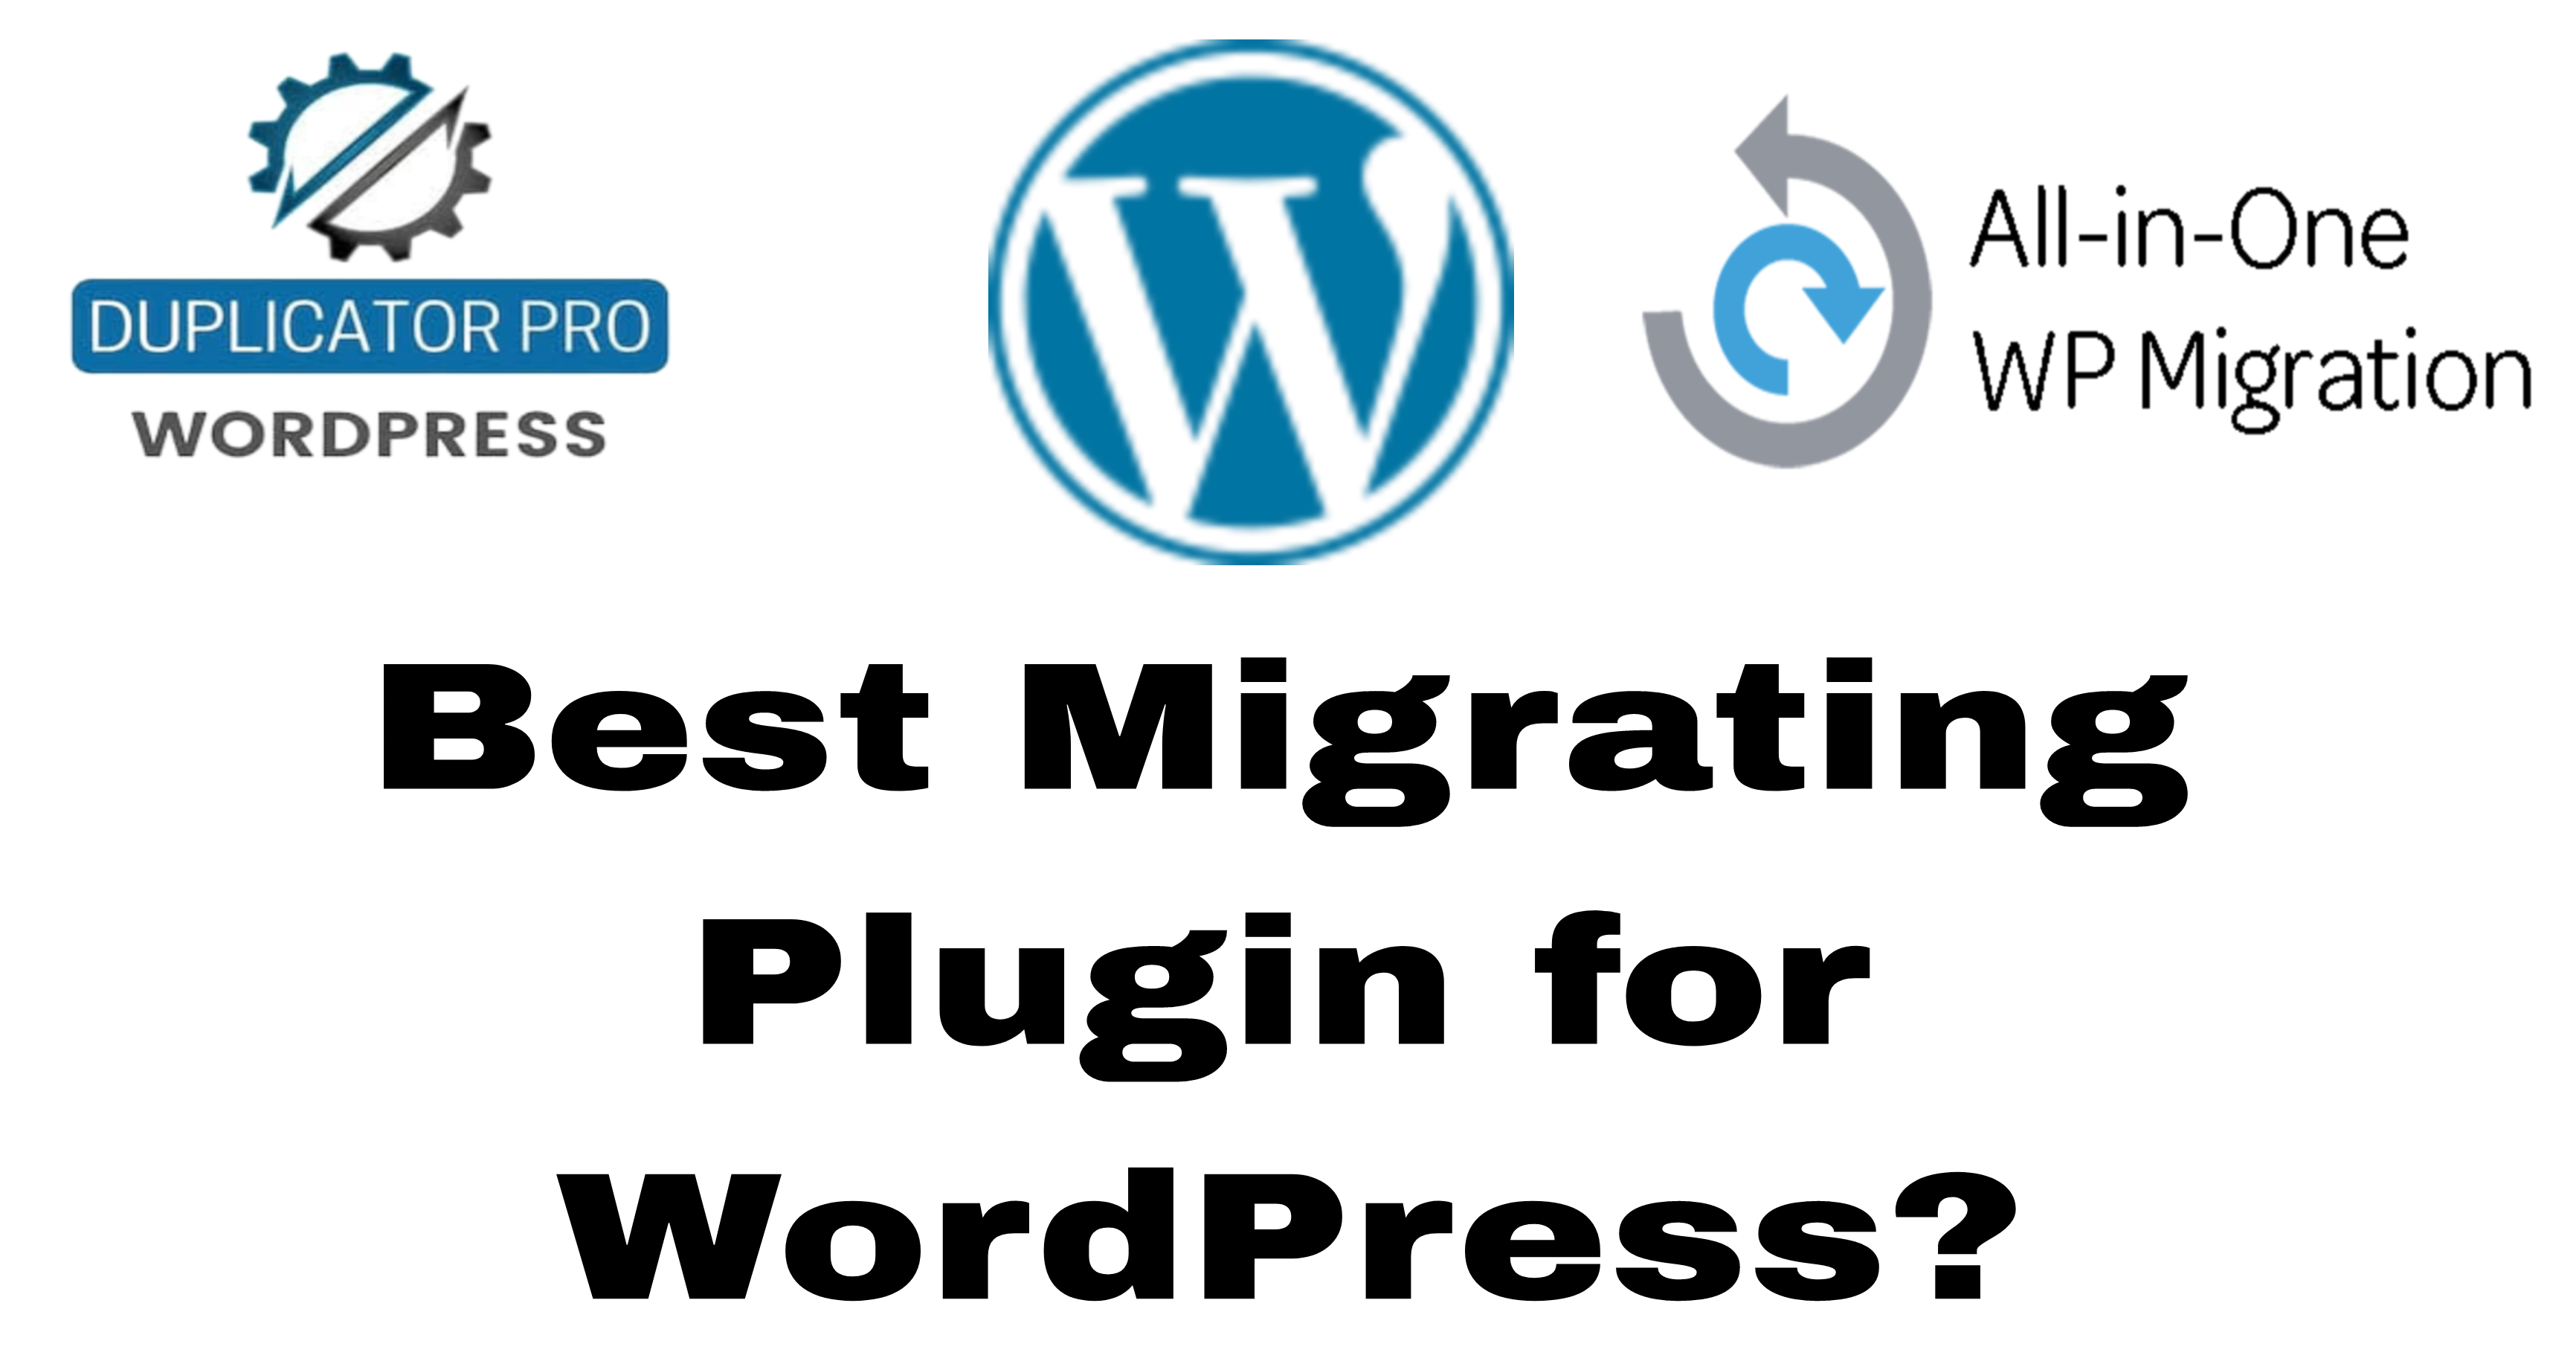 Best Migrating Plugin for WordPress?